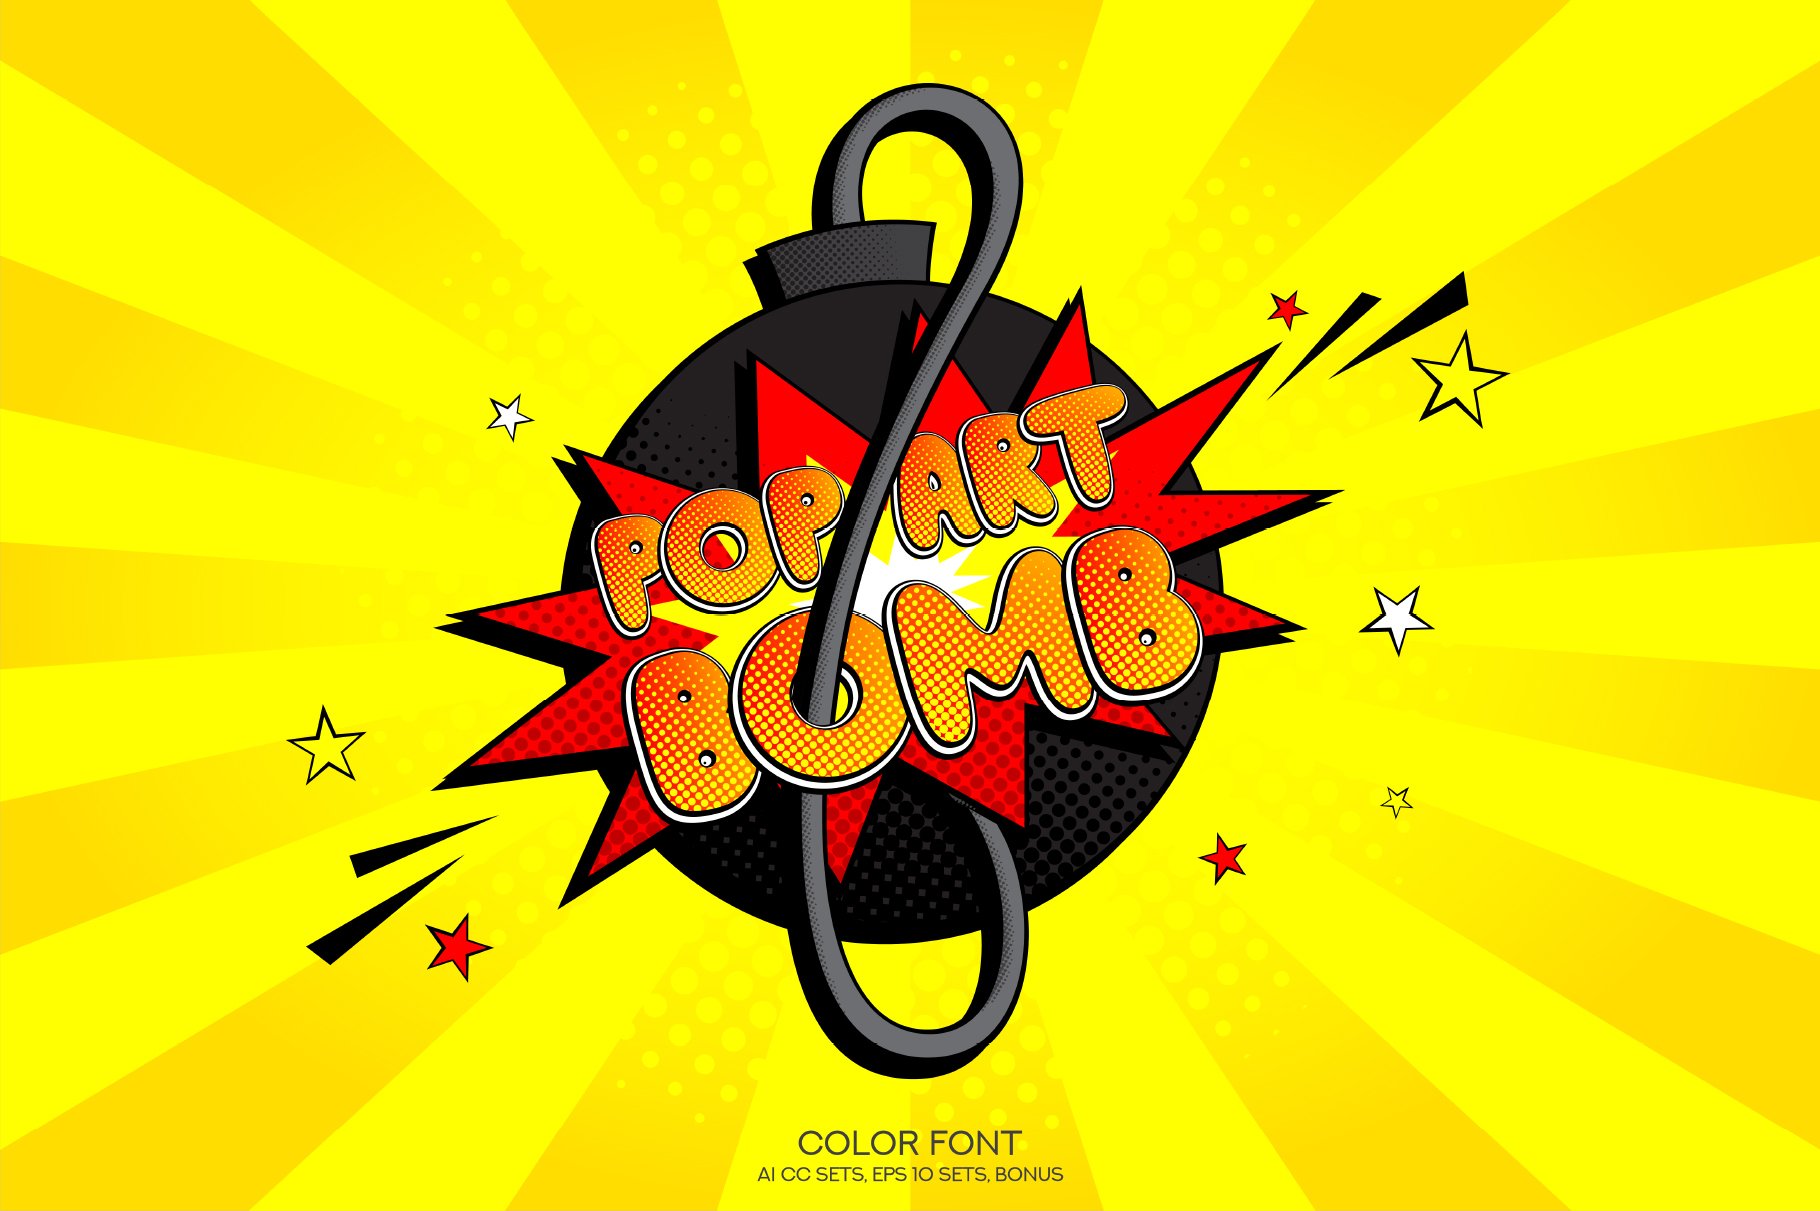 Pop Art Bomb SVG Color Font cover image.